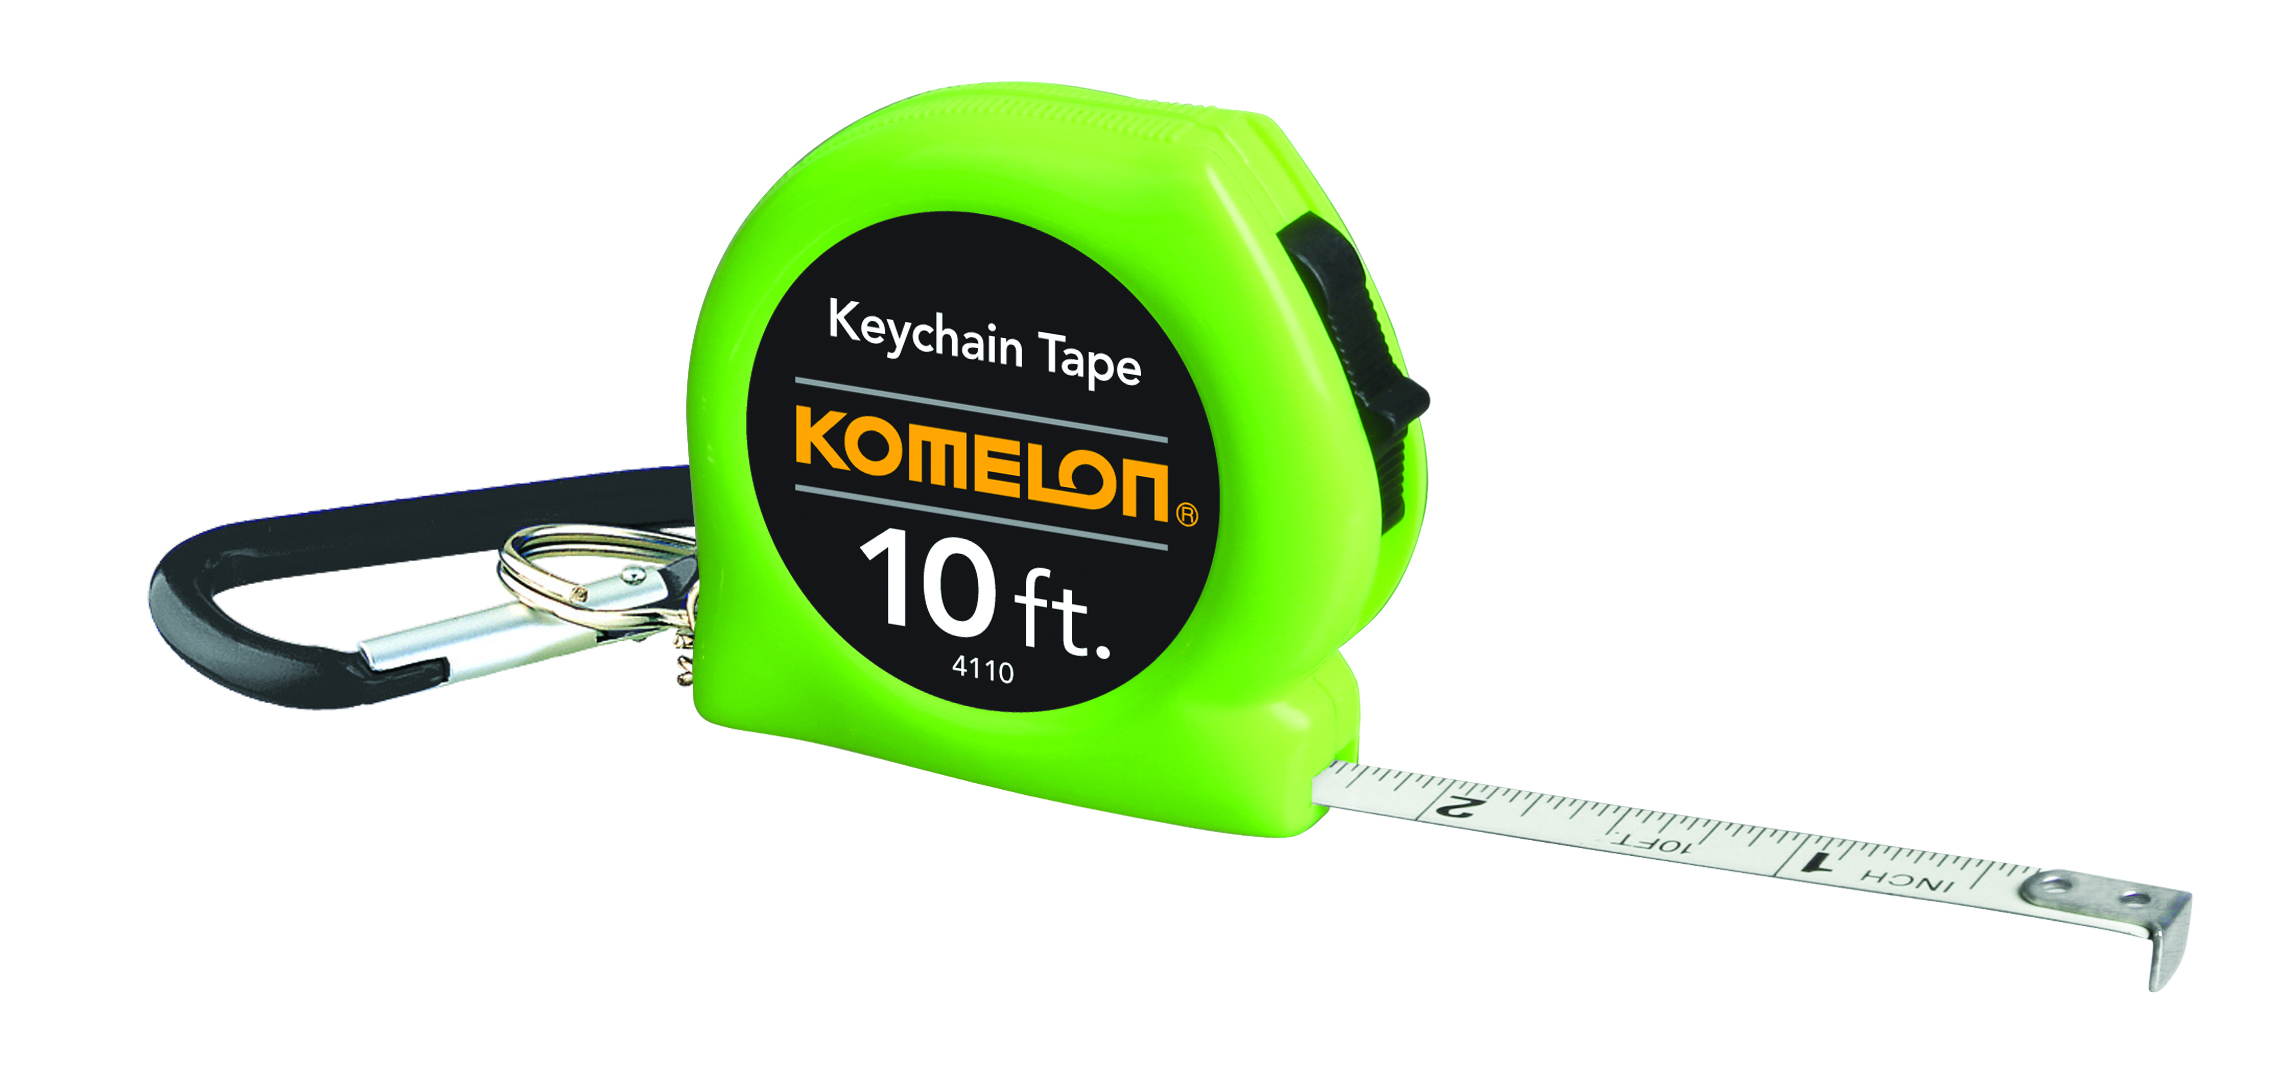 Komelon Flat Tape - F-1200 - Penn Tool Co., Inc